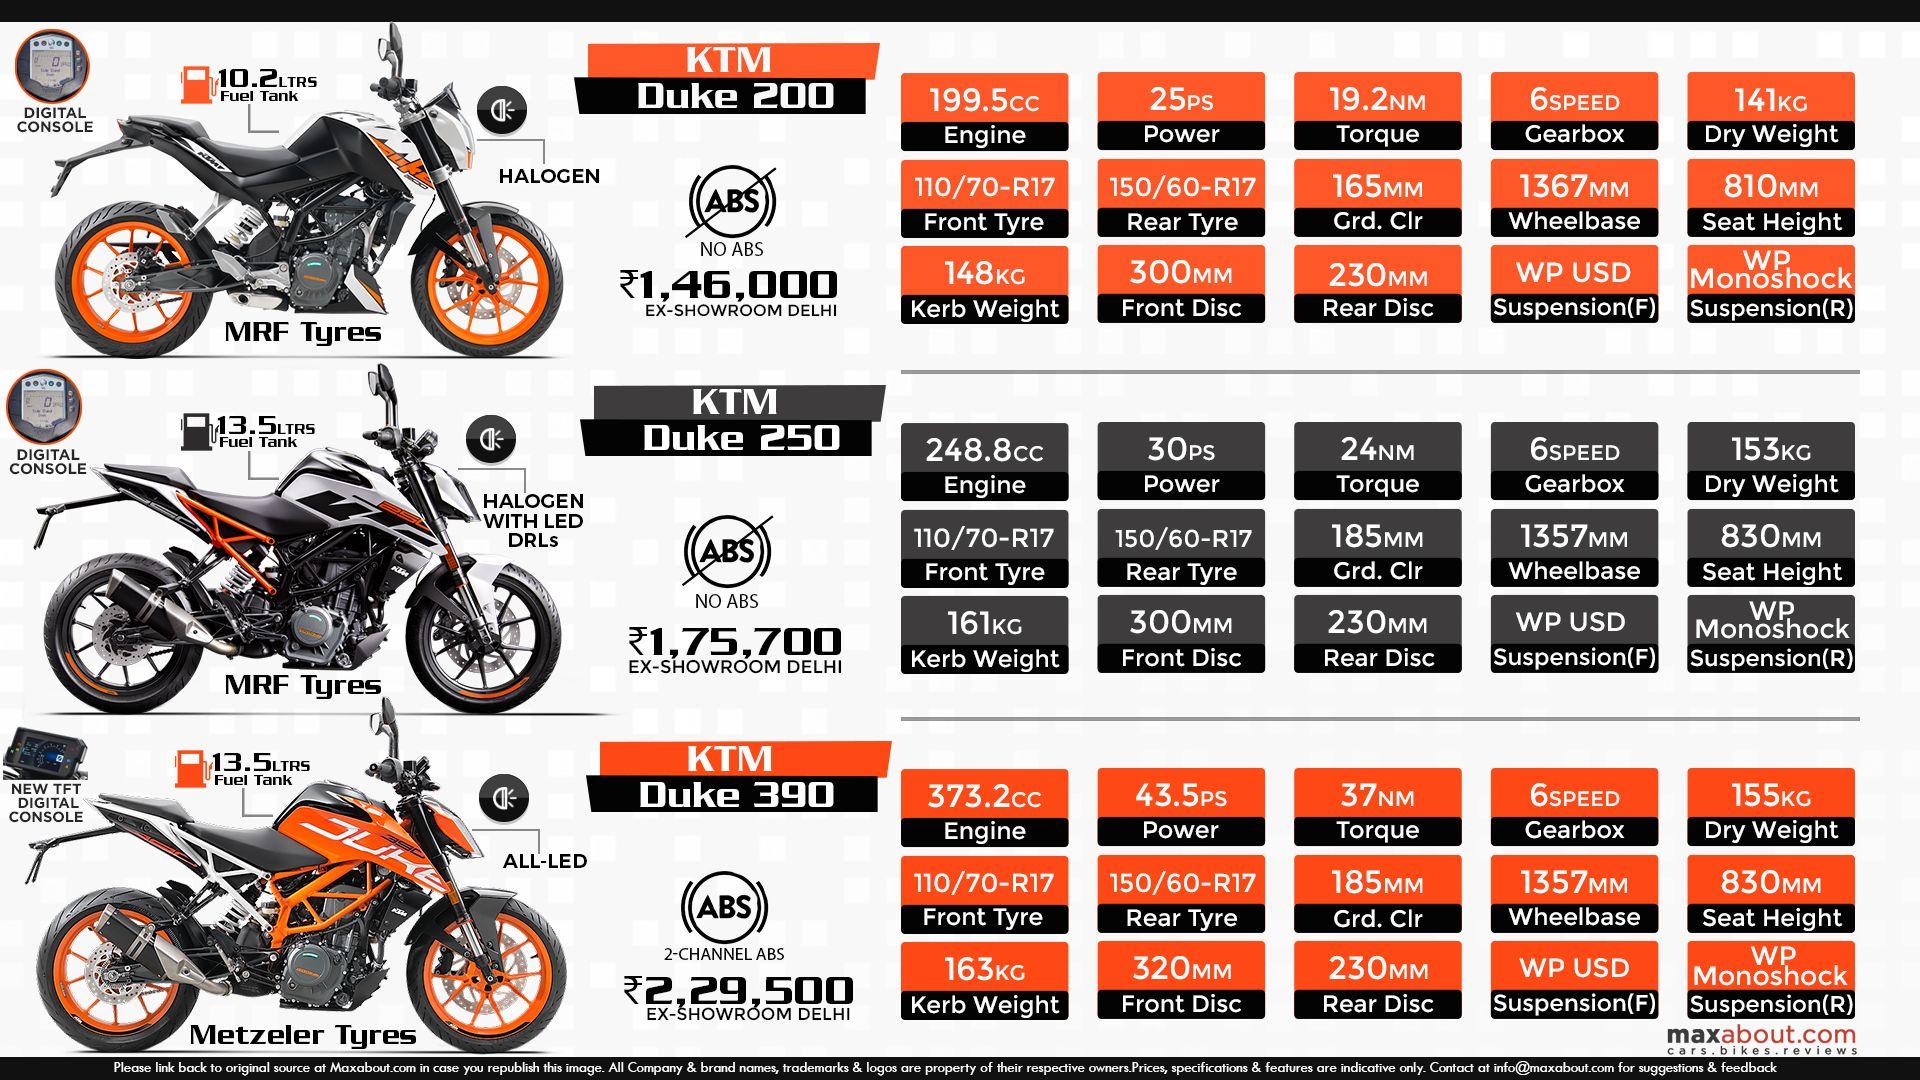 Comparison Infographic: KTM Duke 200 vs. KTM Duke 250 vs. KTM Duke 390